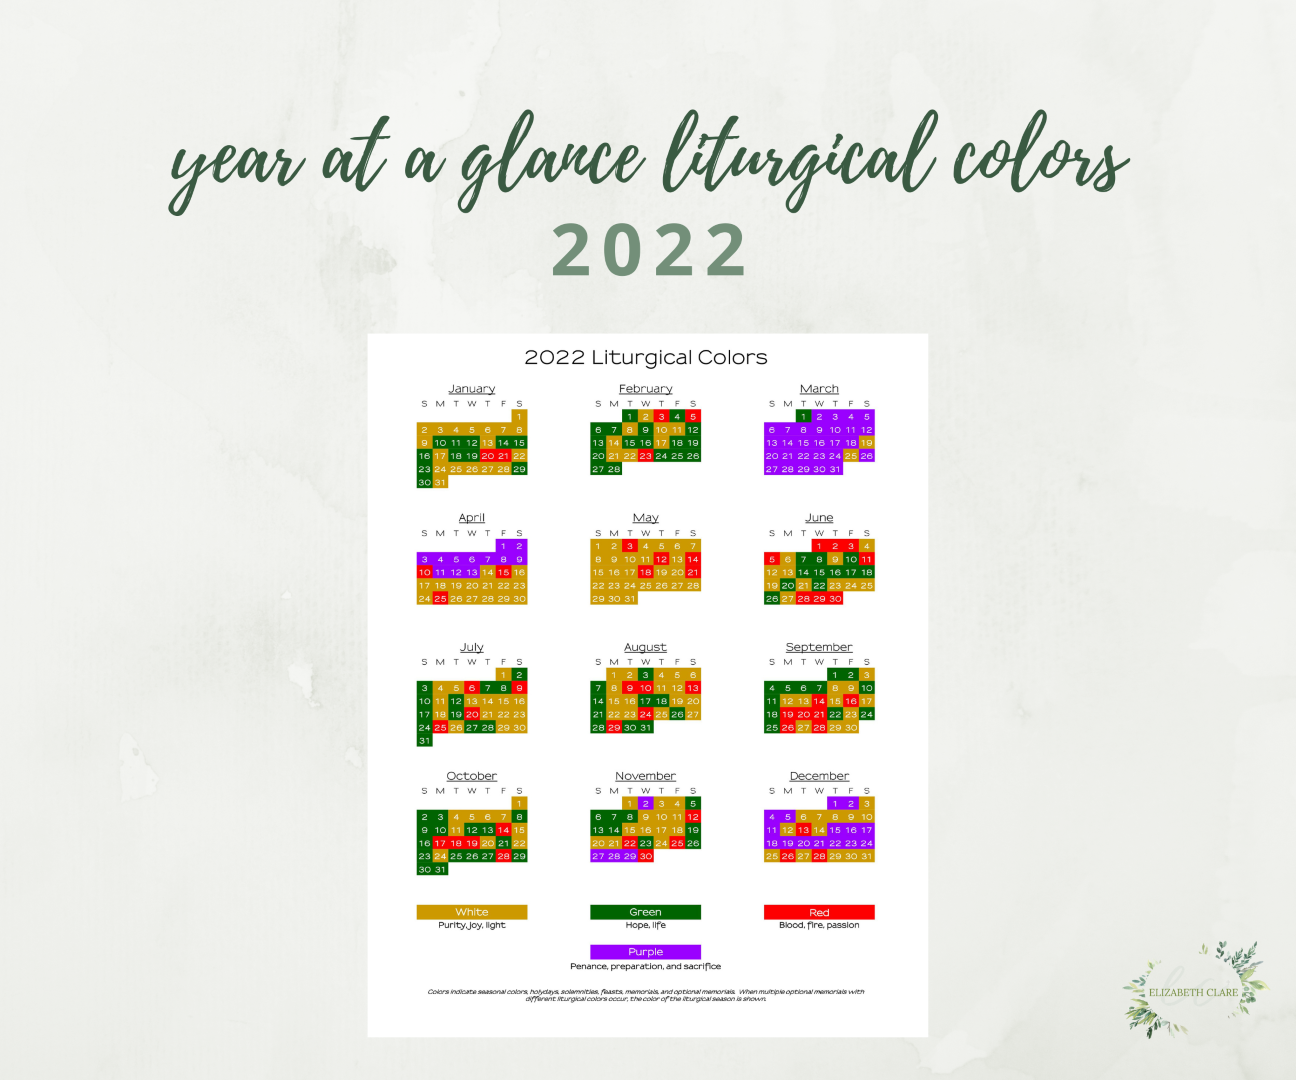 Presbyterian Church Calendar 2022 2022 Catholic Liturgical Year Colors Year At A Glance Printable Pdf -  Elizabeth Clare